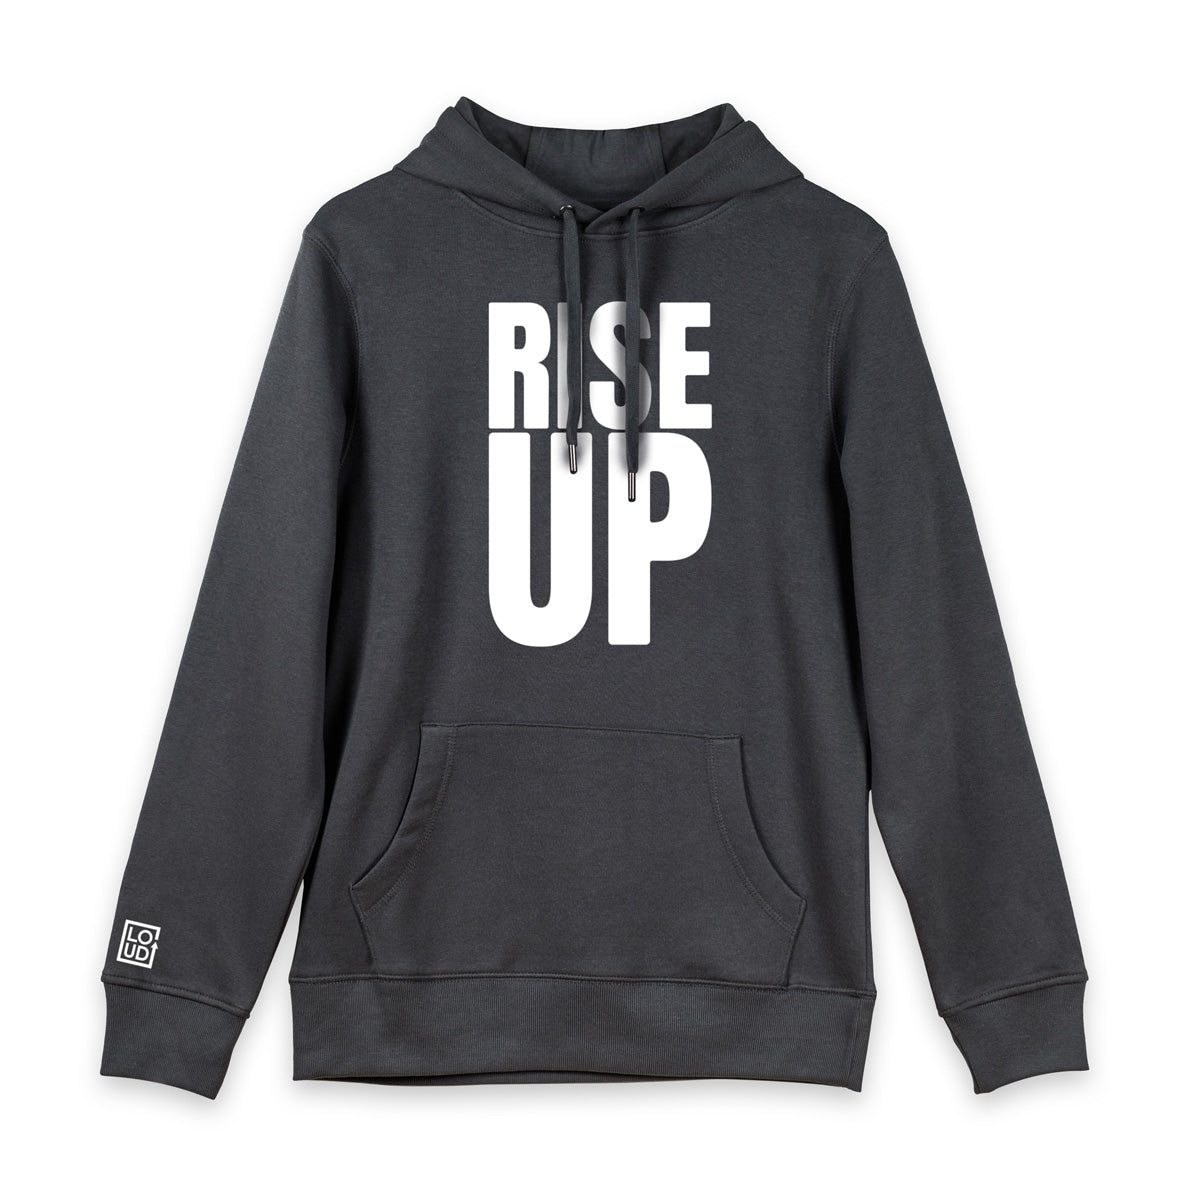 Unisex Hoodie "Rise Up"